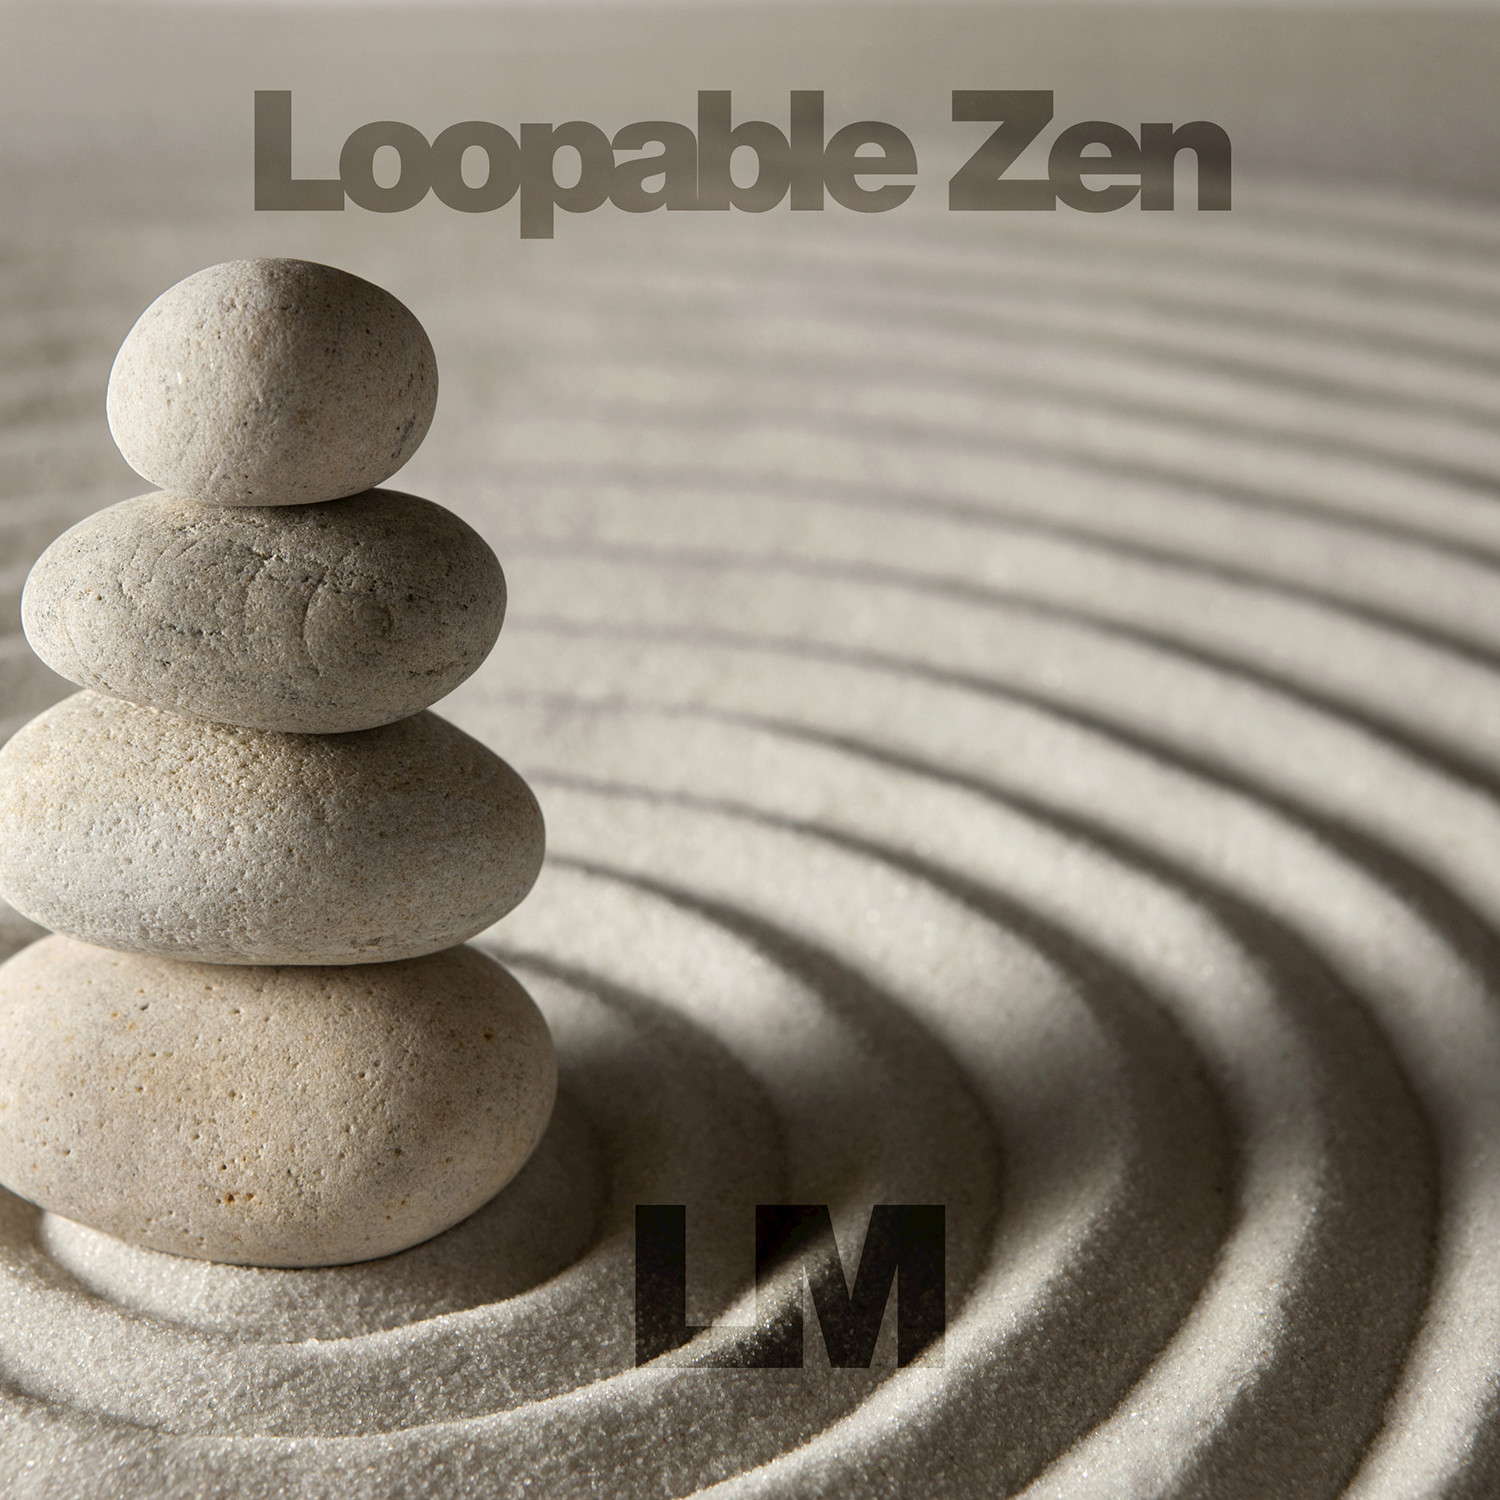 Gong Mediation (Gong Zen - Loopable)